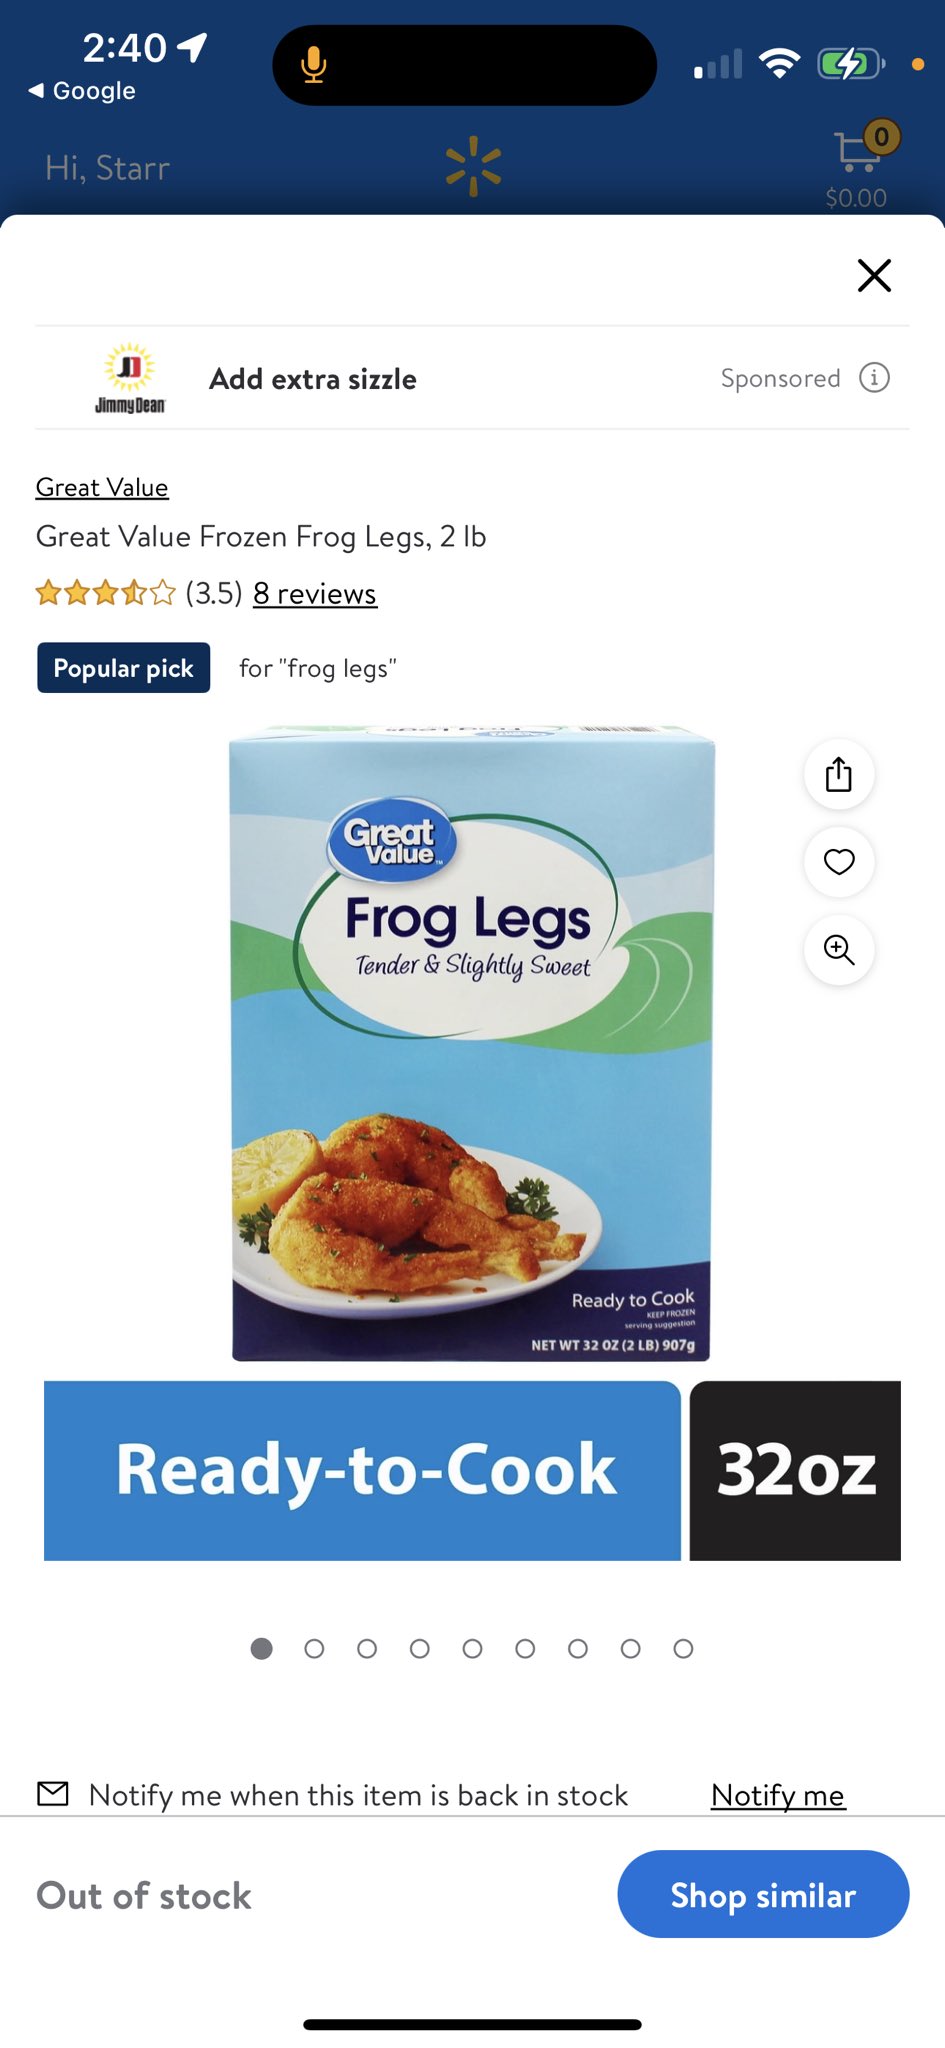 Great Value Frozen Frog Legs, 2 lb